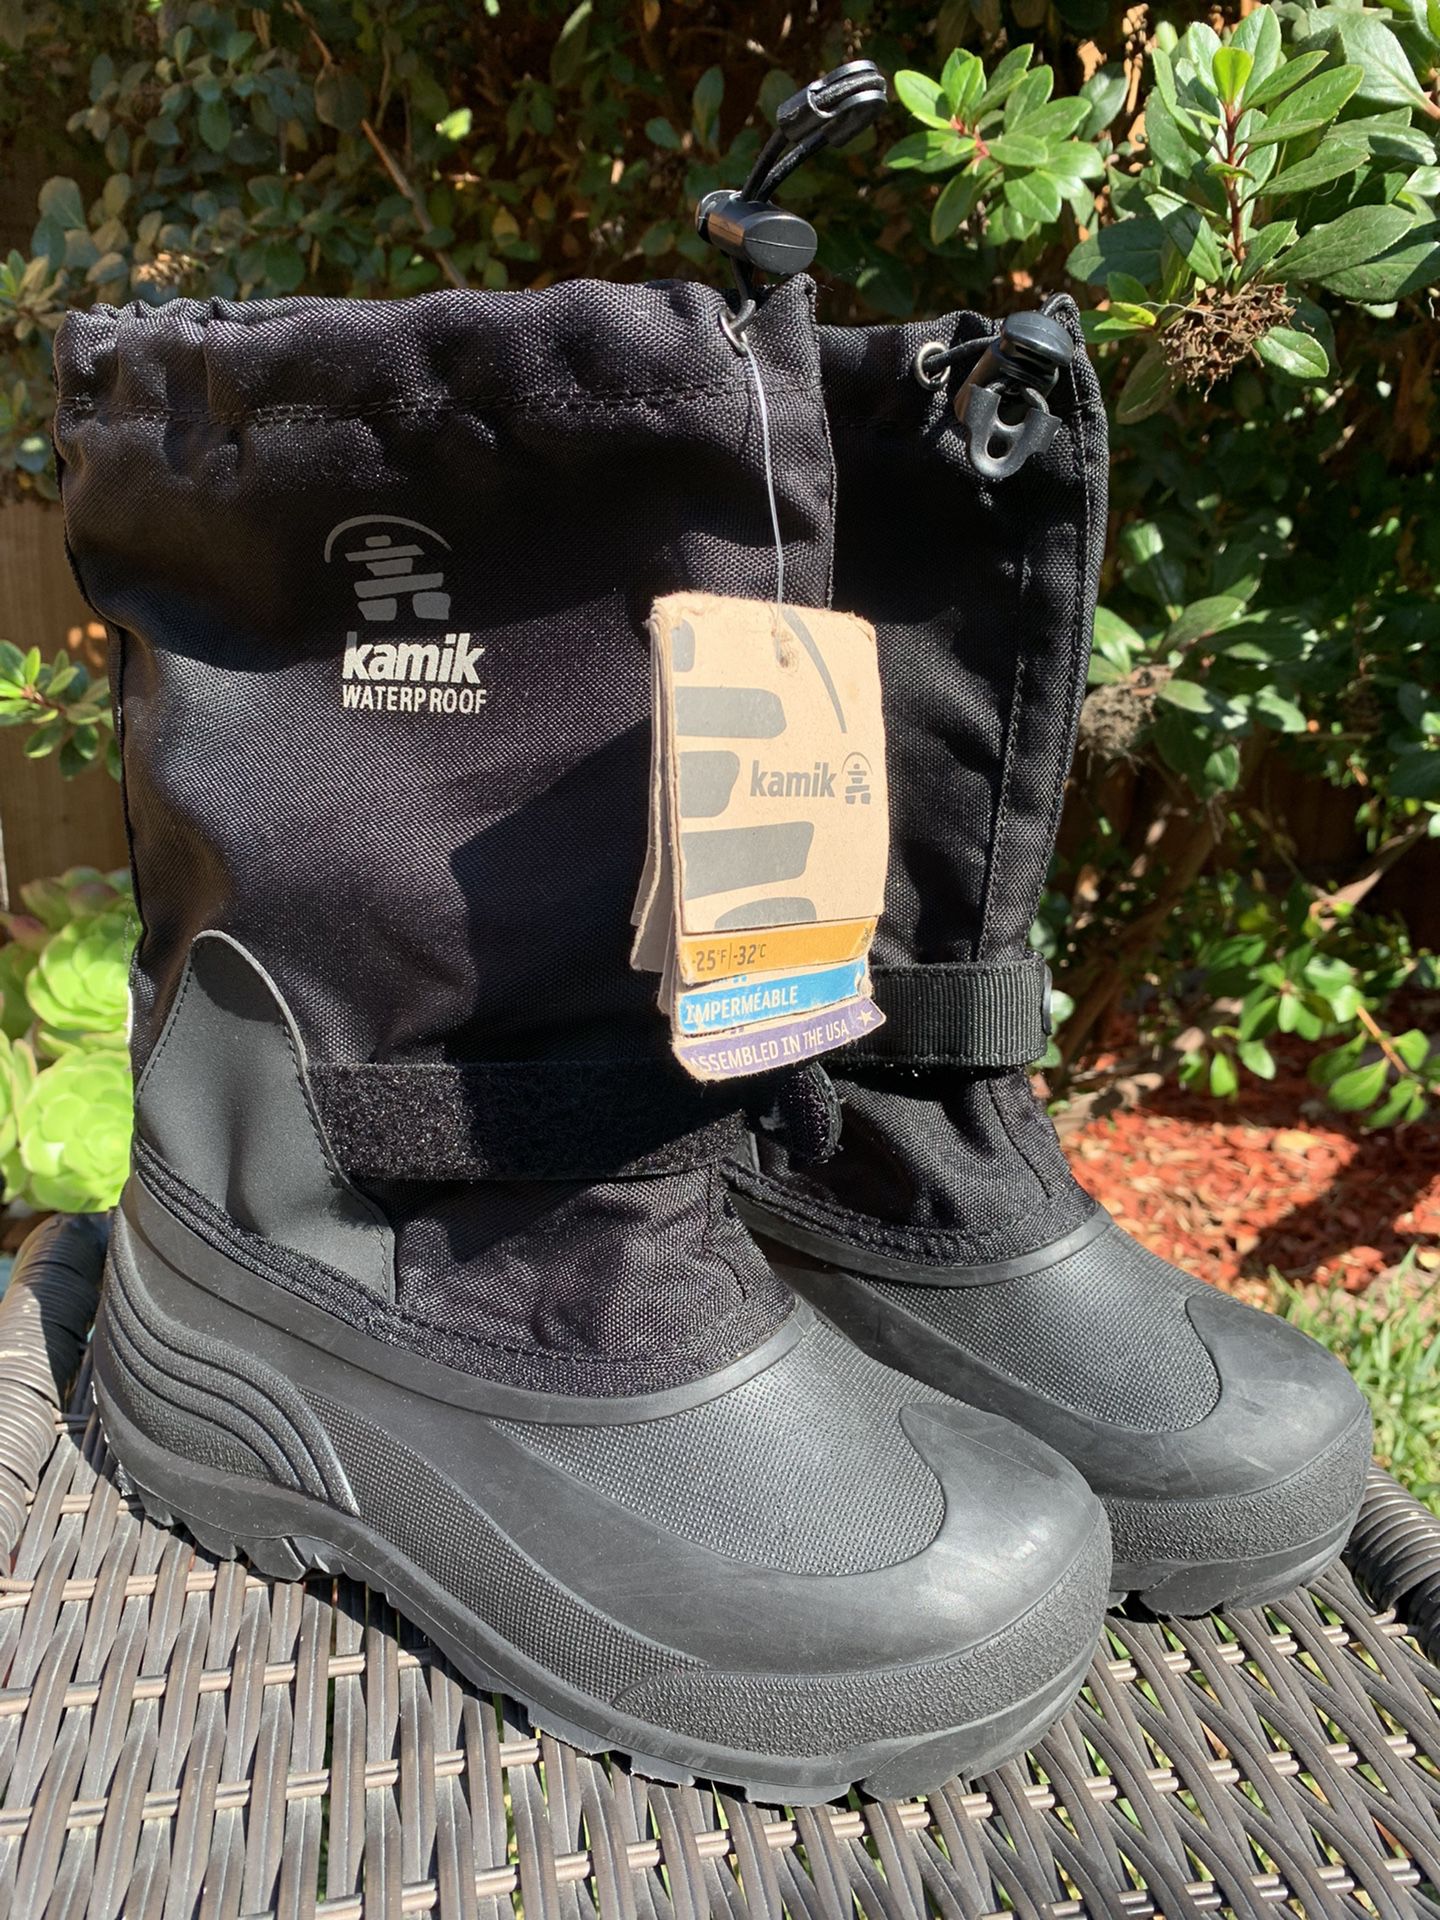 Kamik Waterproof Winter Boots Size 6